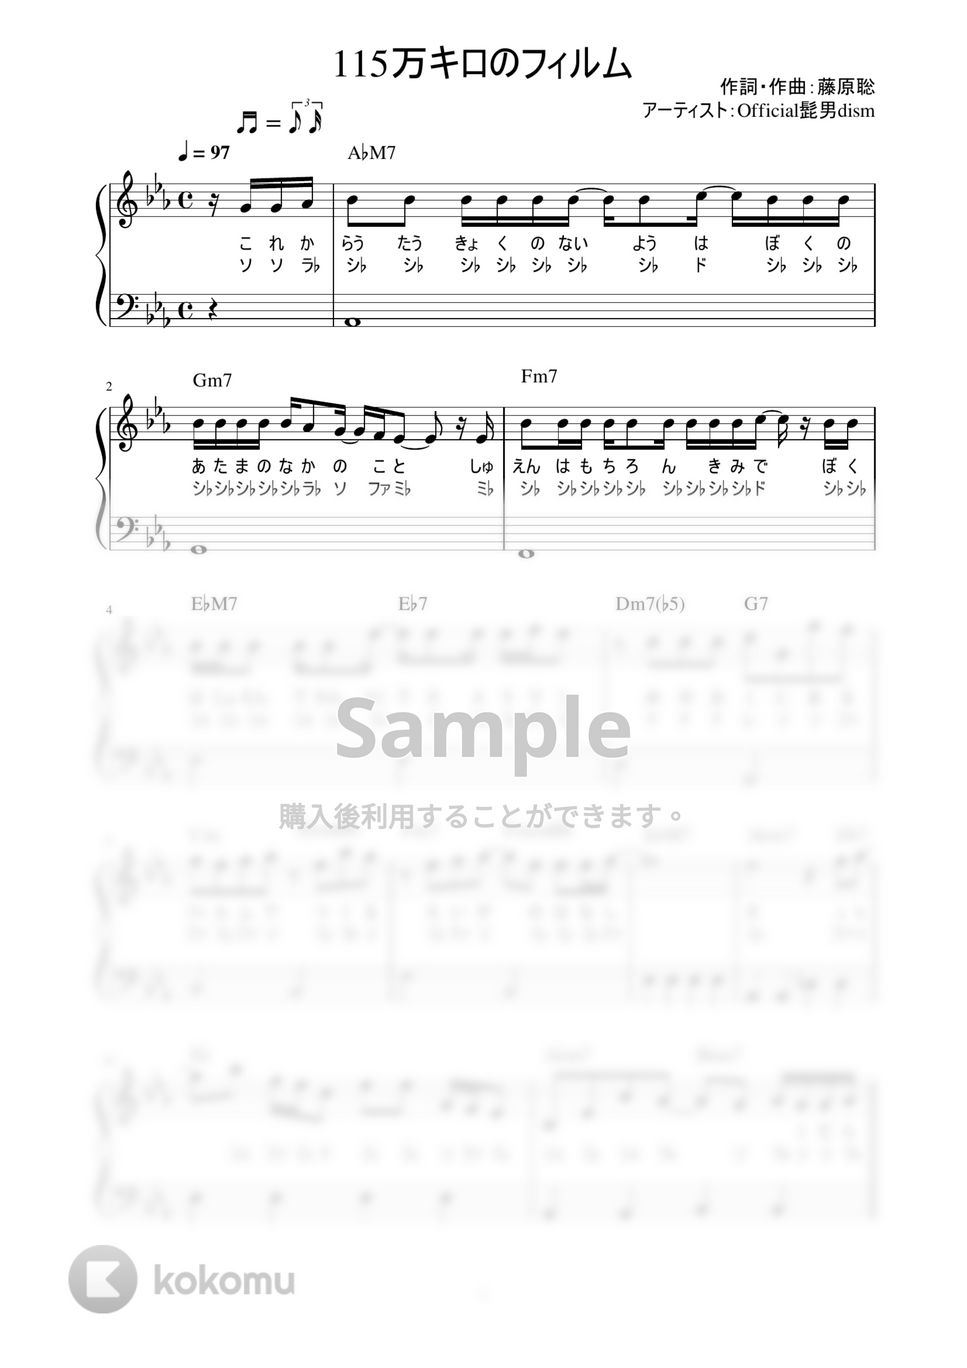 Official髭男dism - 115万キロのフィルム (かんたん / 歌詞付き / ドレミ付き / 初心者) by piano.tokyo